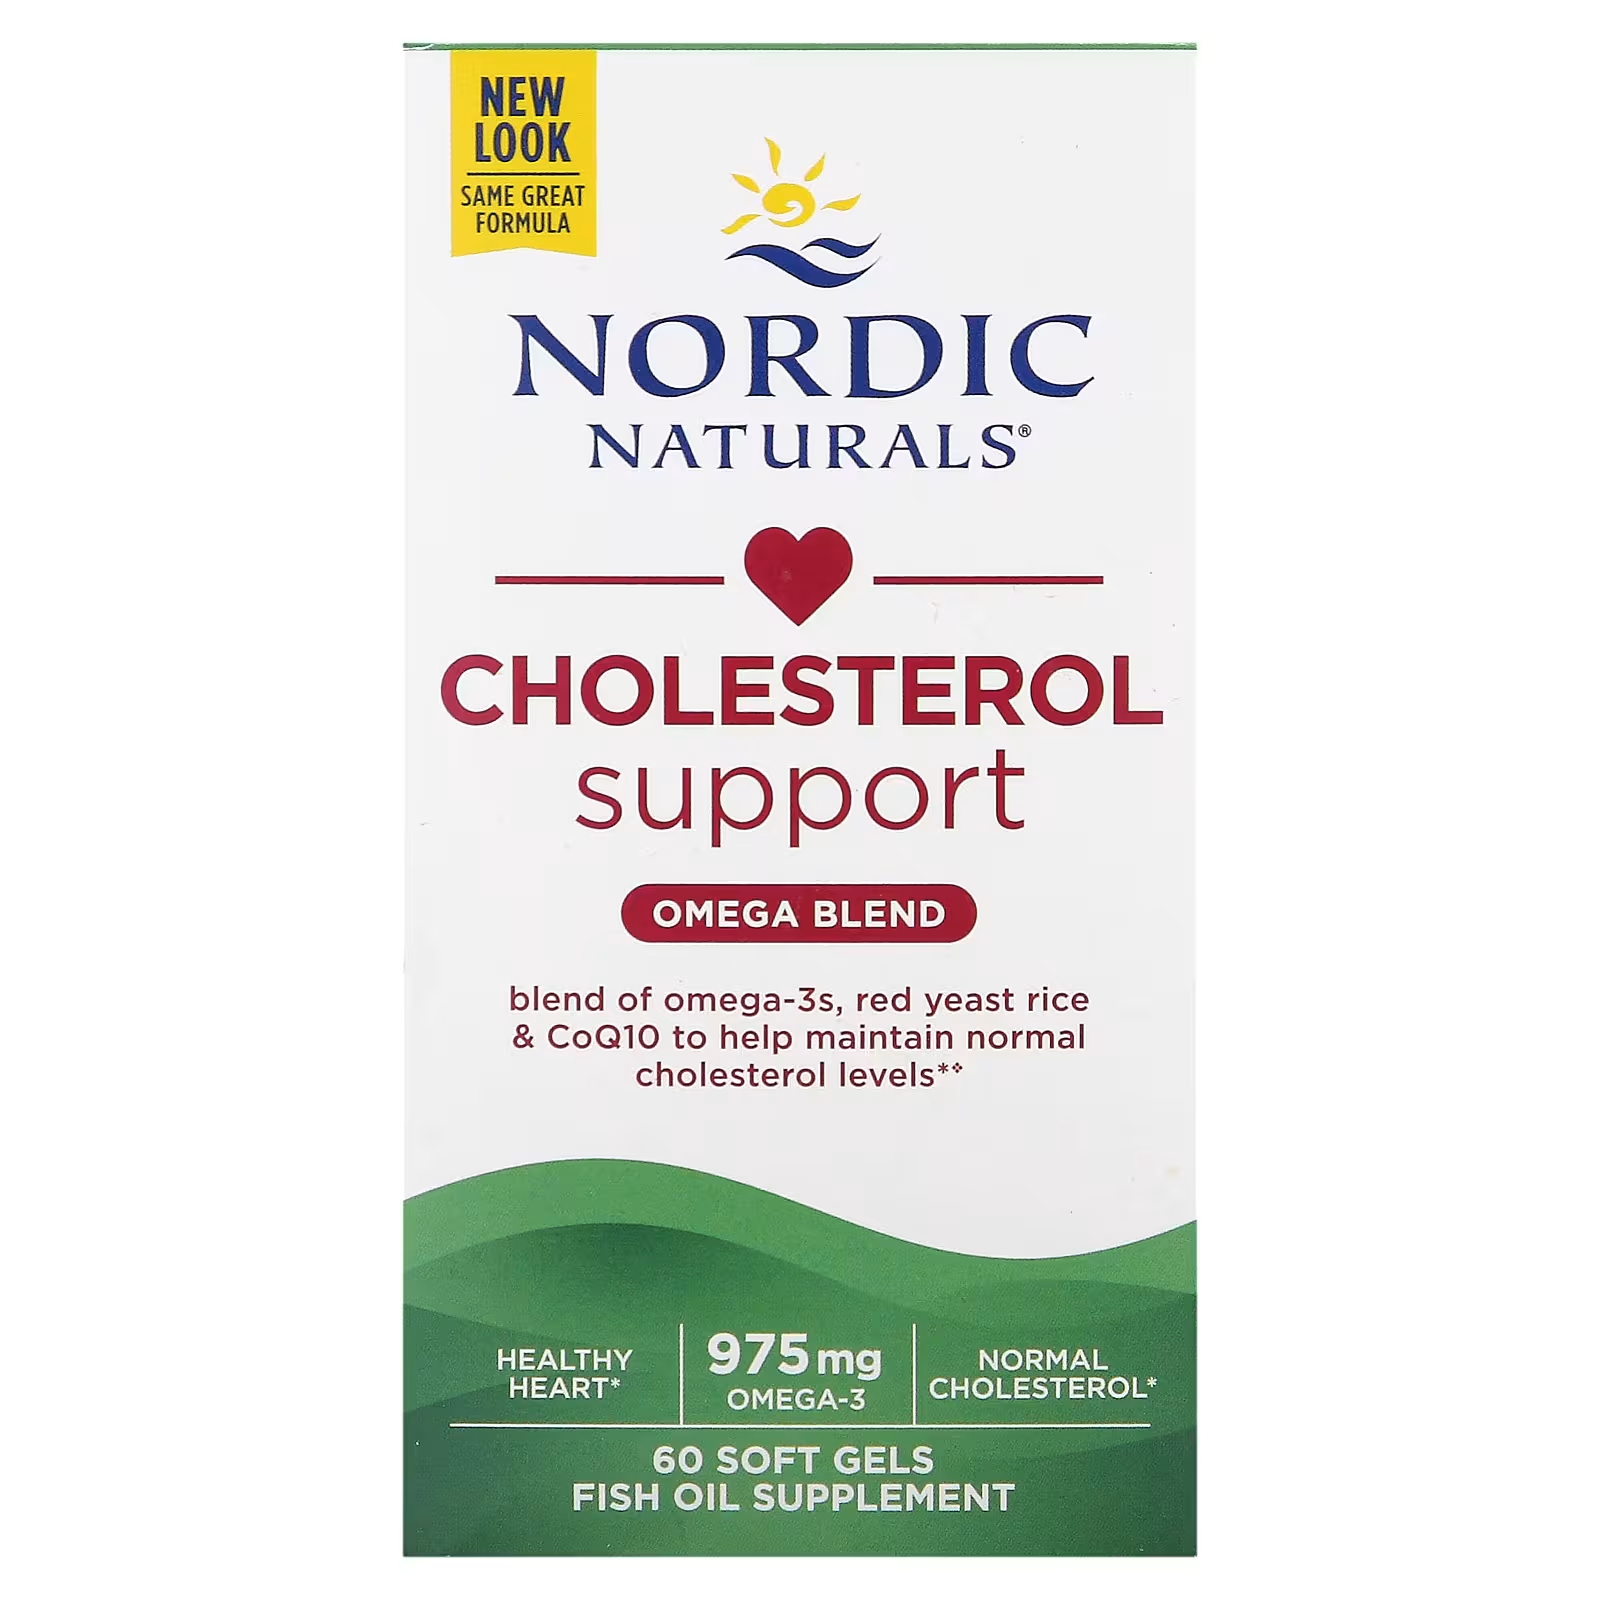 Nordic Naturals Поддержка холестерина Omega Blend 975 мг, 60 мягких гелей (325 мг на мягкую гель) nordic naturals поддержка холестерина omega blend 975 мг 60 мягких гелей 325 мг на мягкую гель